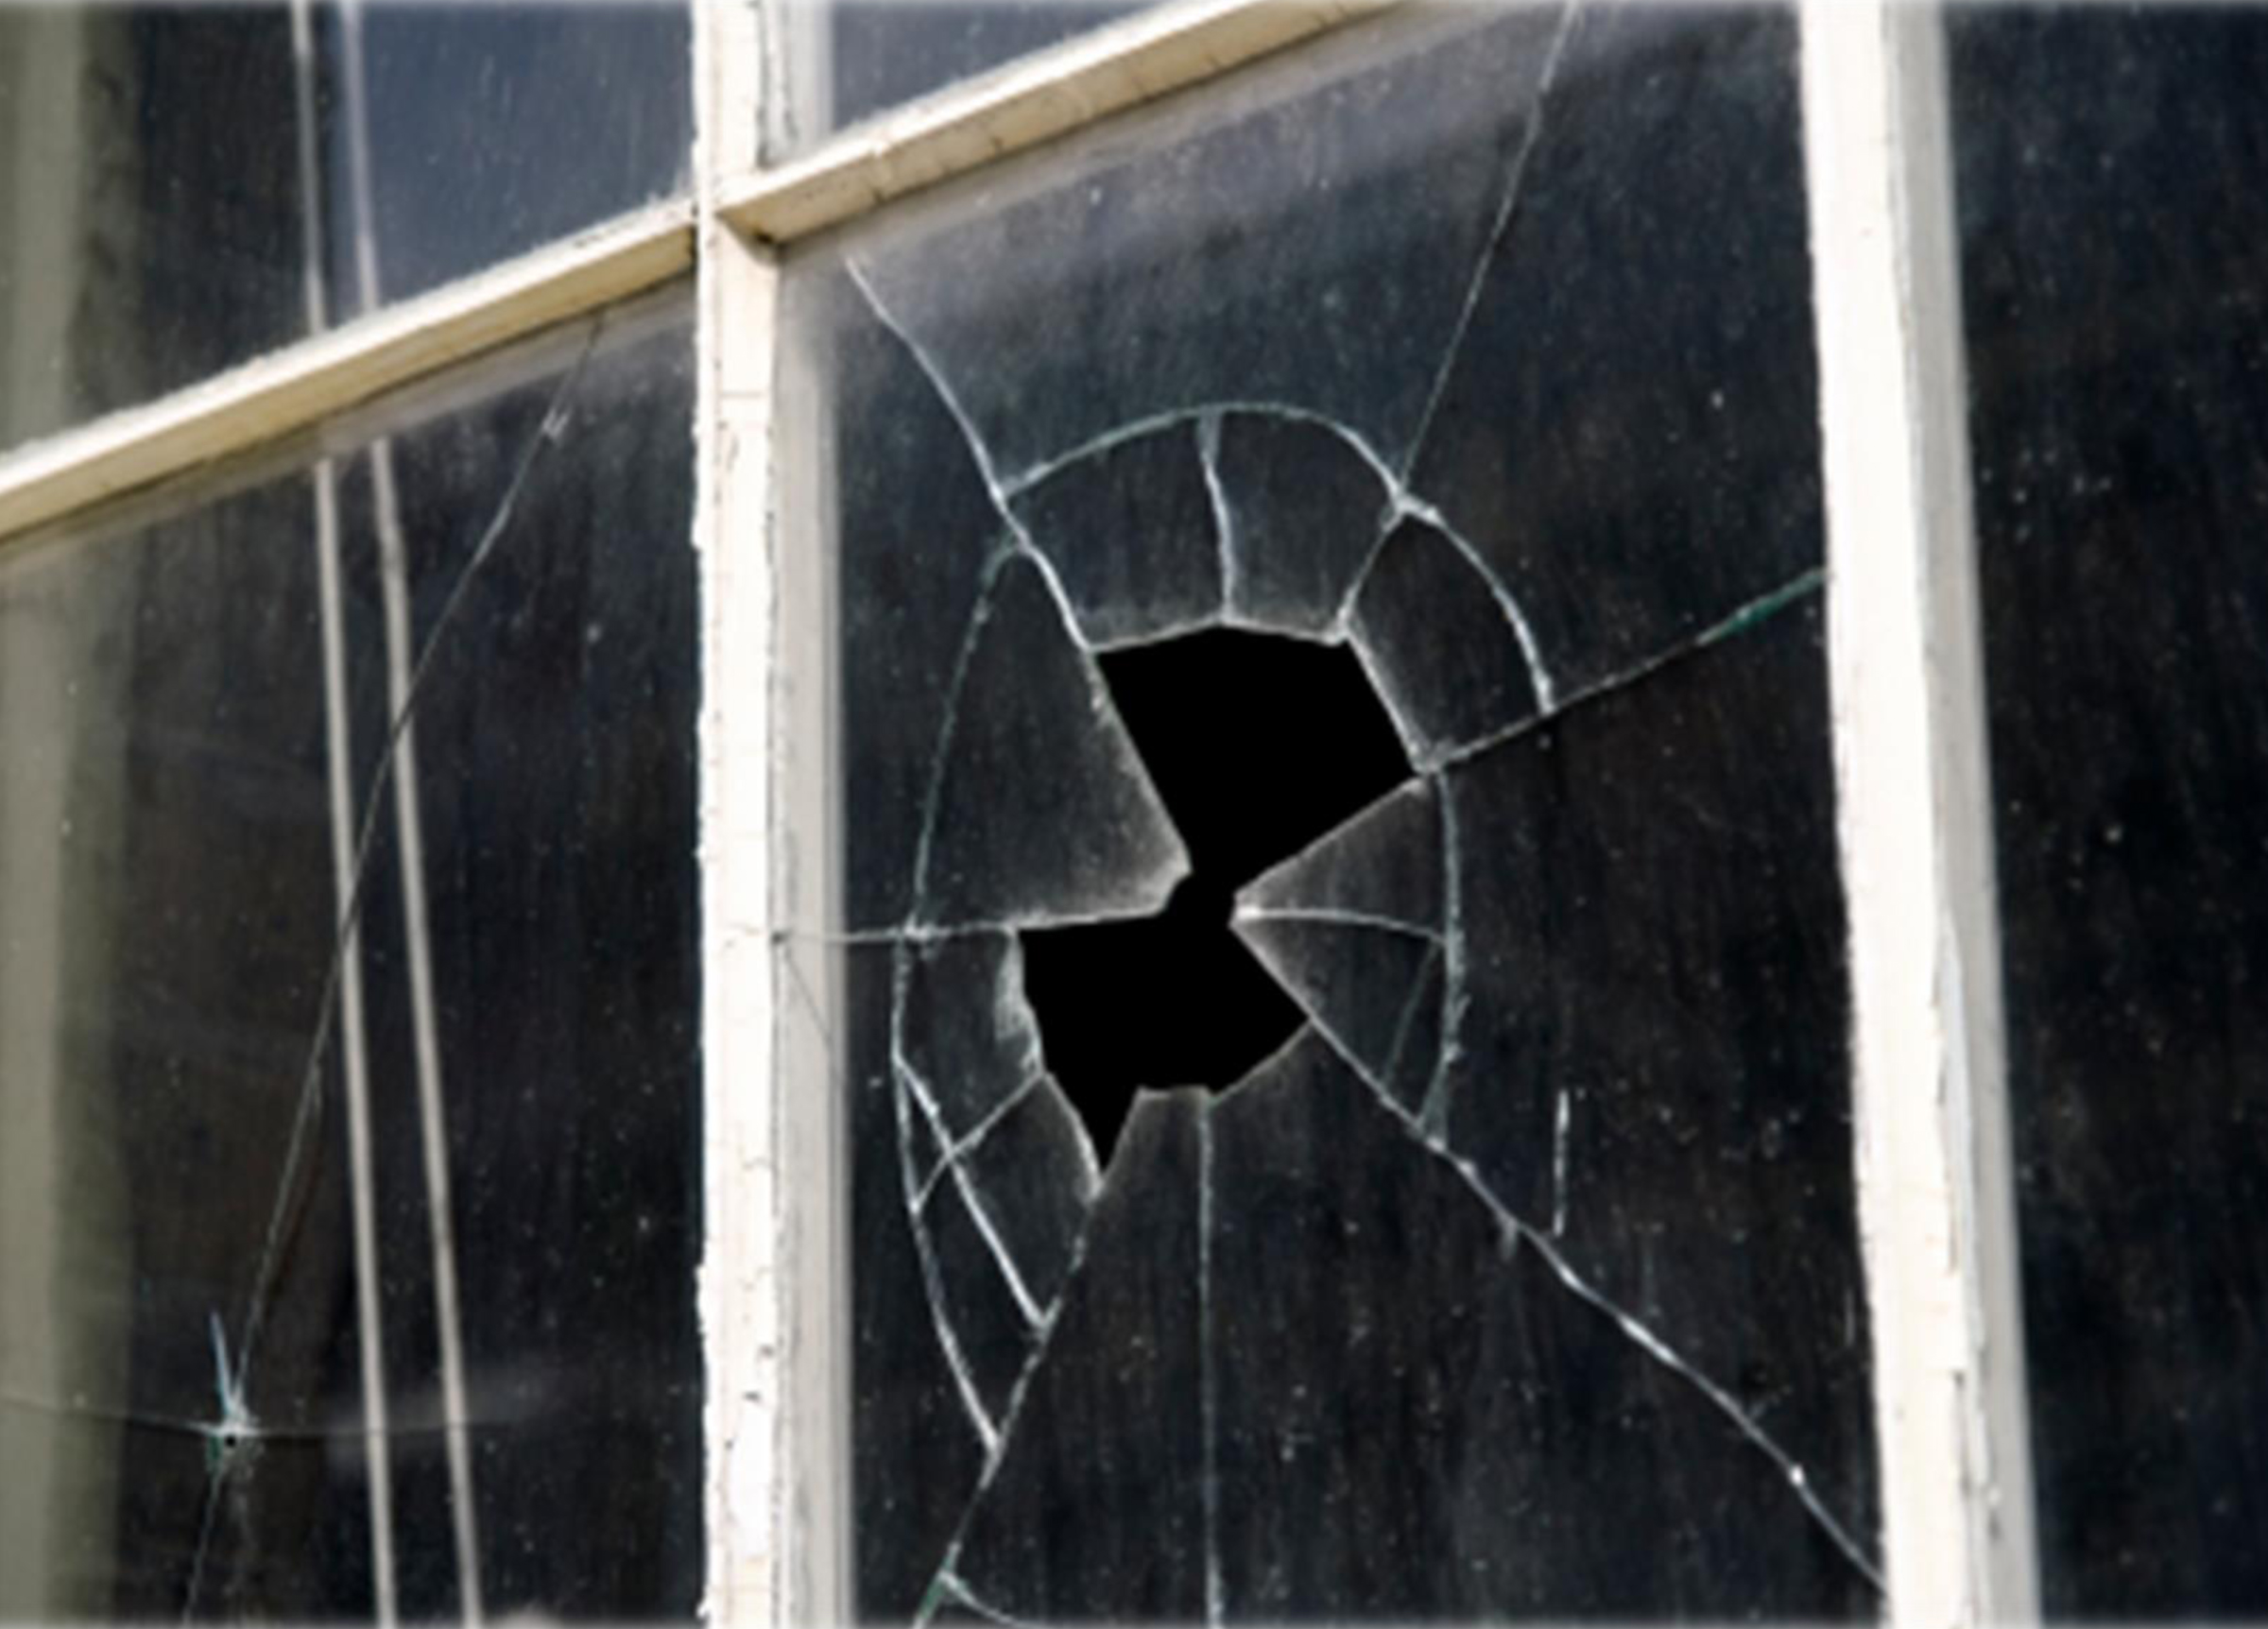 Разбил окно звук. Разбитое окно. Разбитое стекло в окне. Трещина на окне. Трещина на стекле окна.